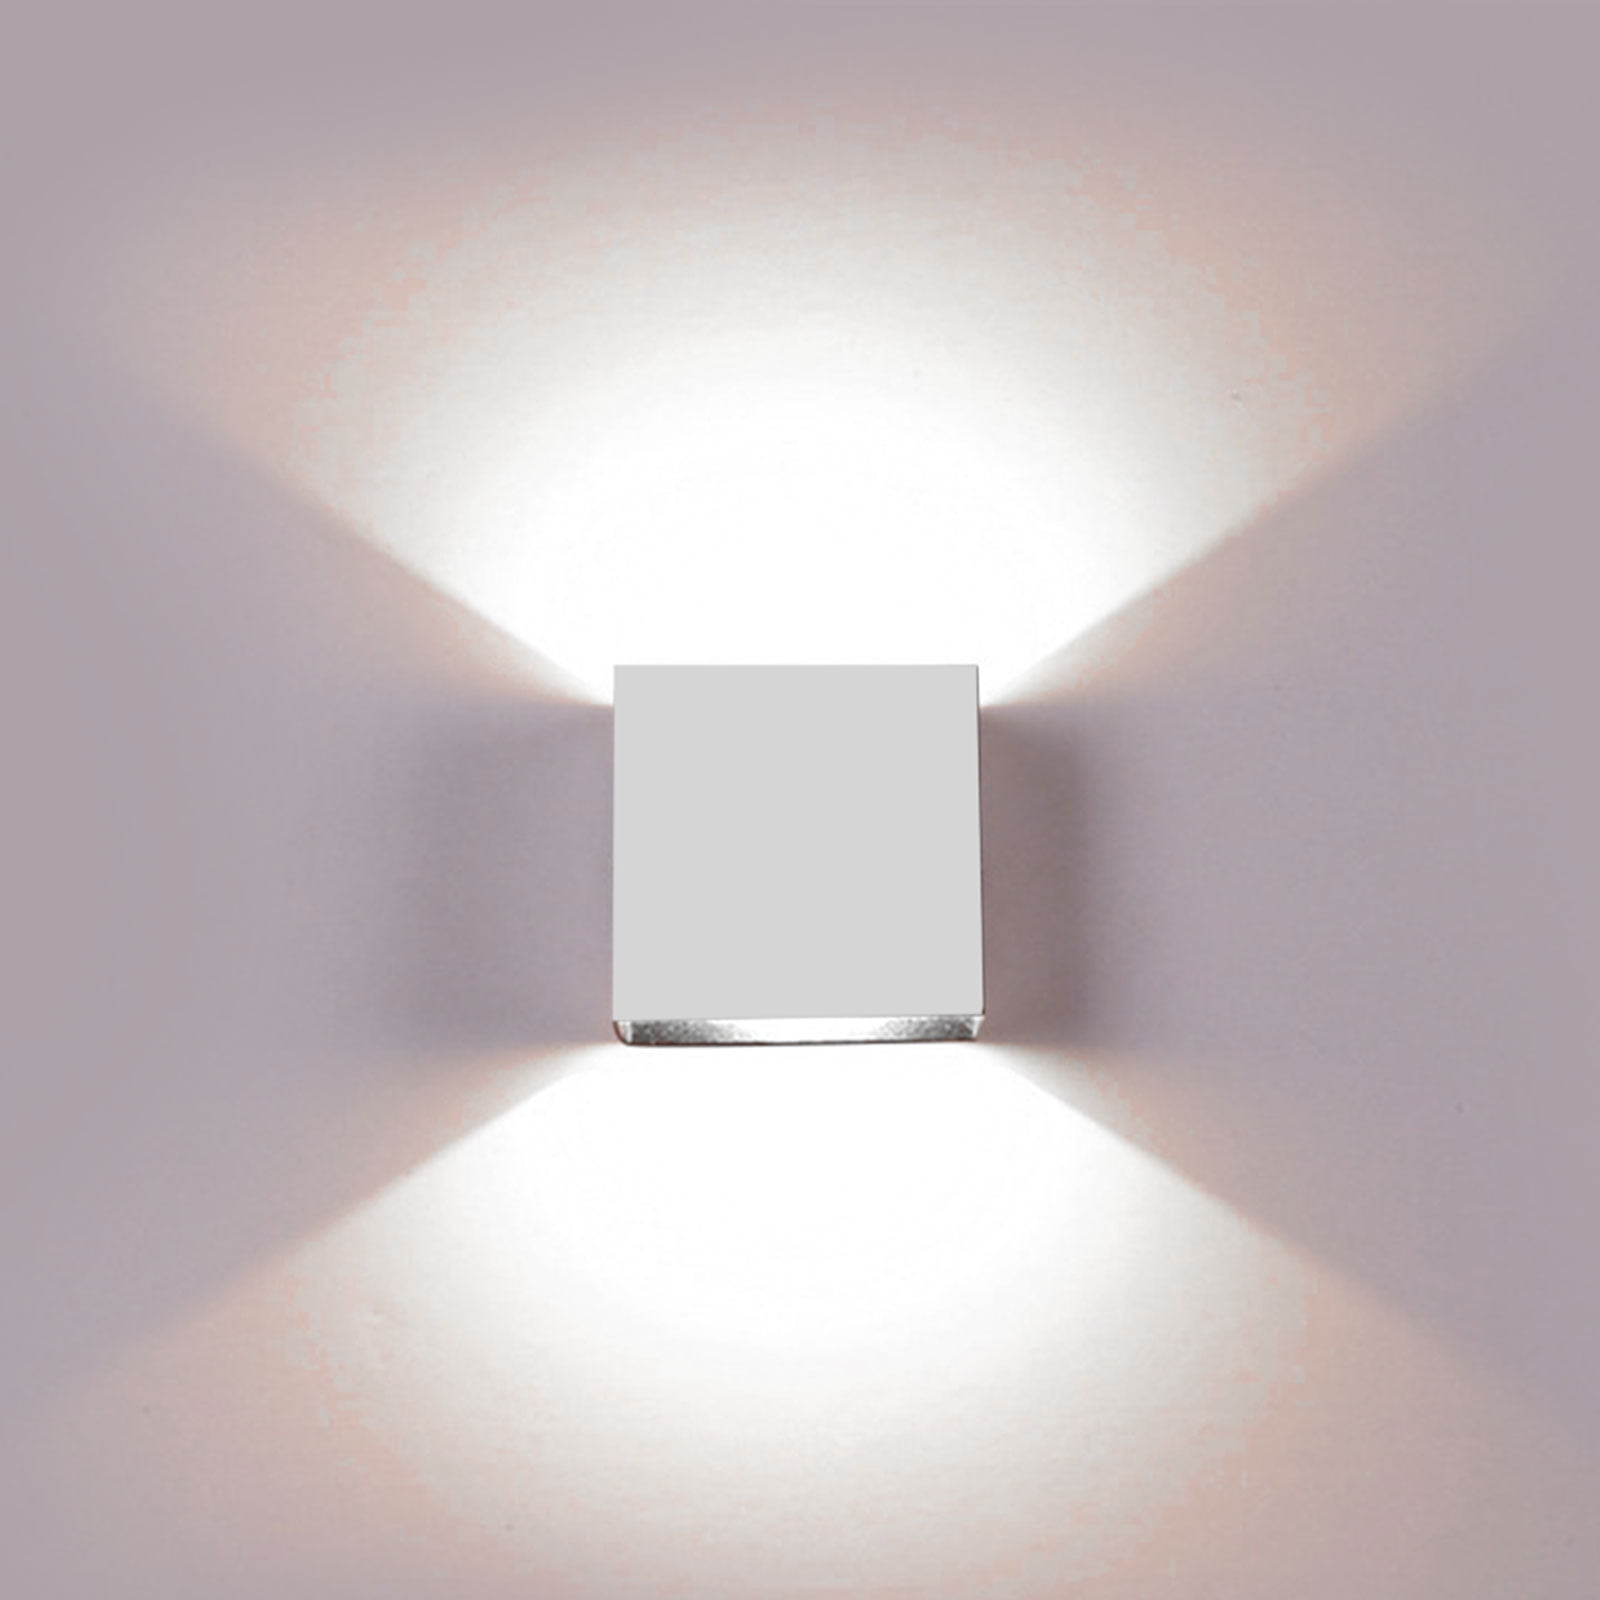 3W LED Home Wall Light Spot Lighting Lamp Bedroom Hotel Modern Sconce Fixture 